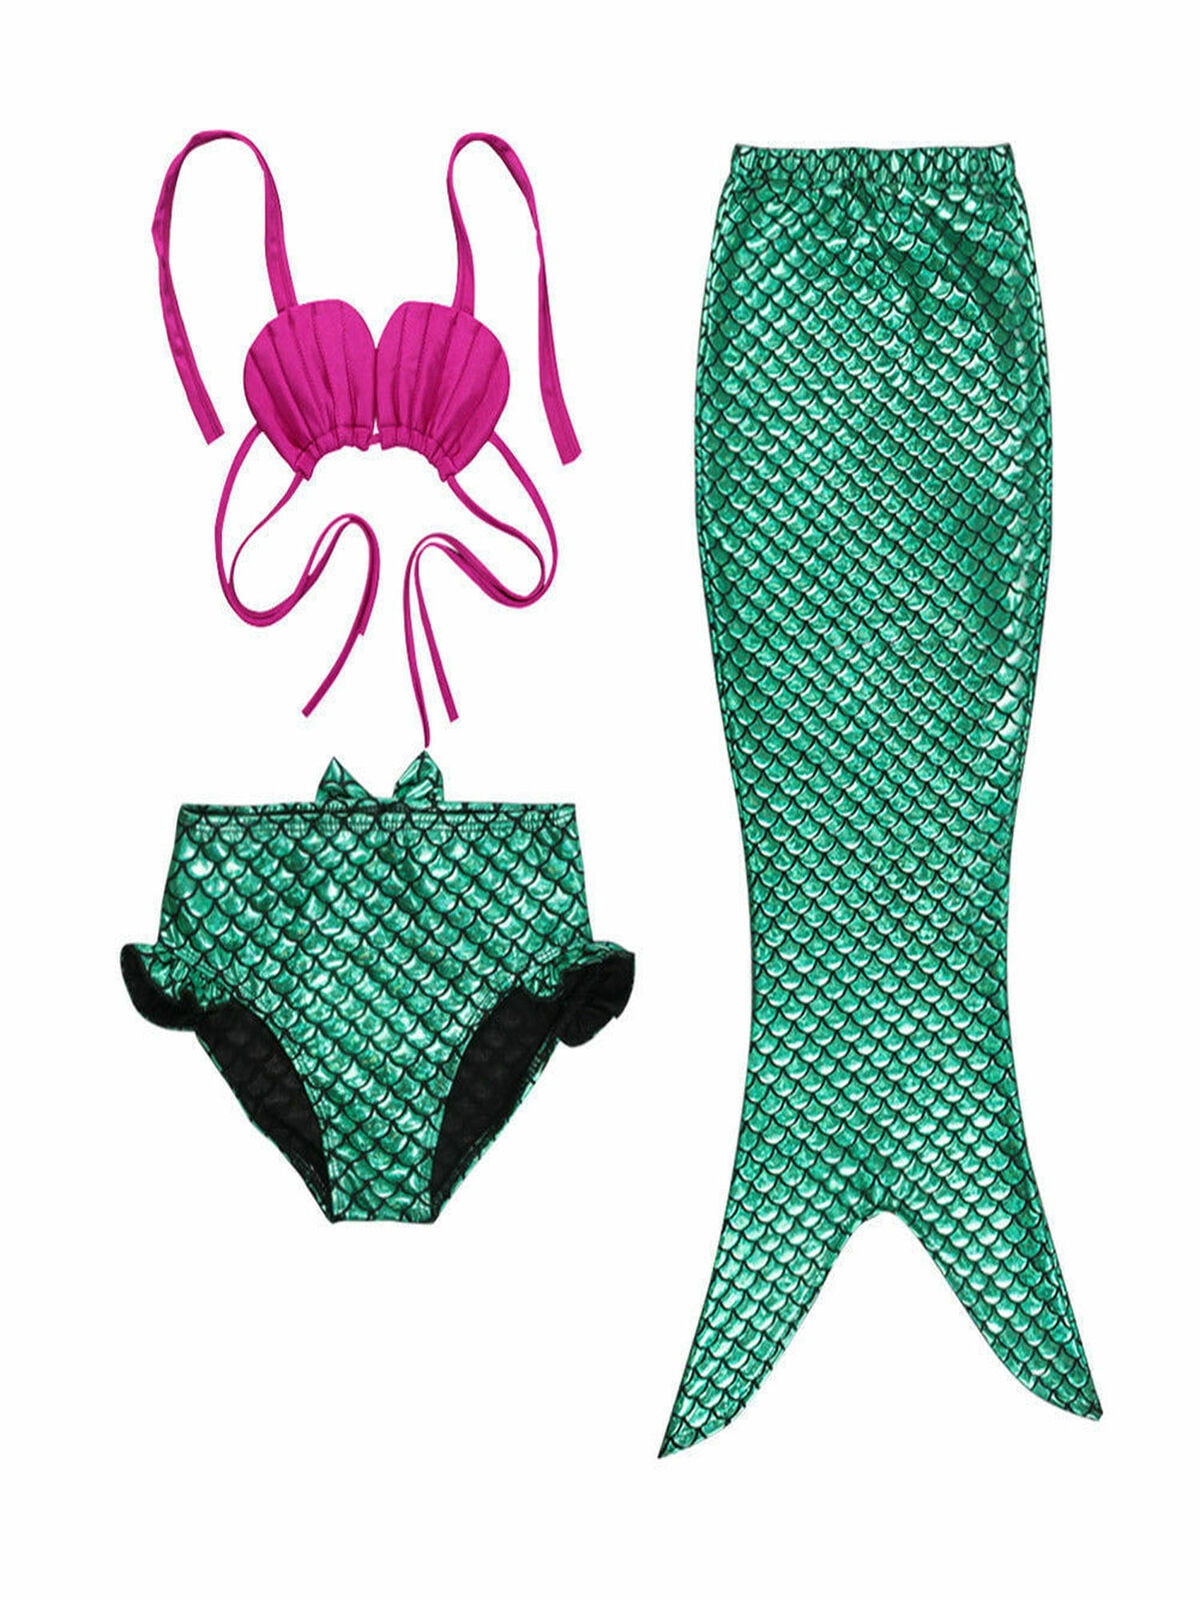 DecStore 3PCS Girls Swimsuit Mermaid Tail Swimwear Bikini Set Costume for Swimming